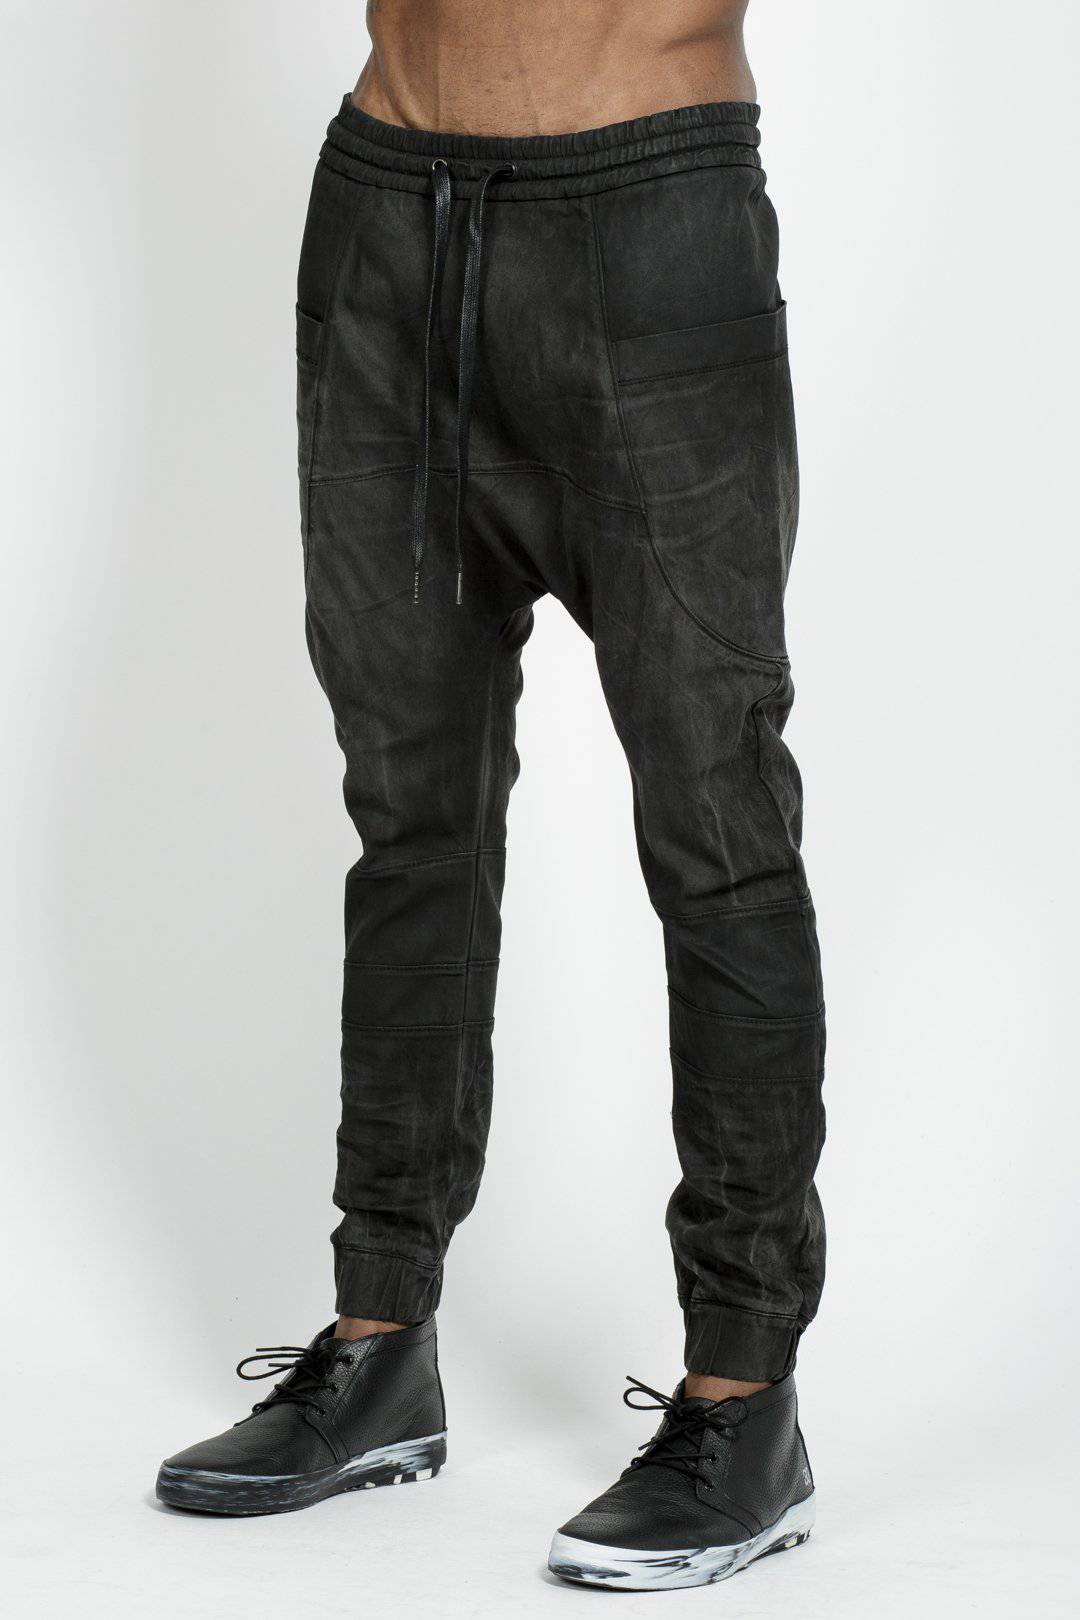 Konus Men's Drop Crotch Sweatpants in Black by Shop at Konus